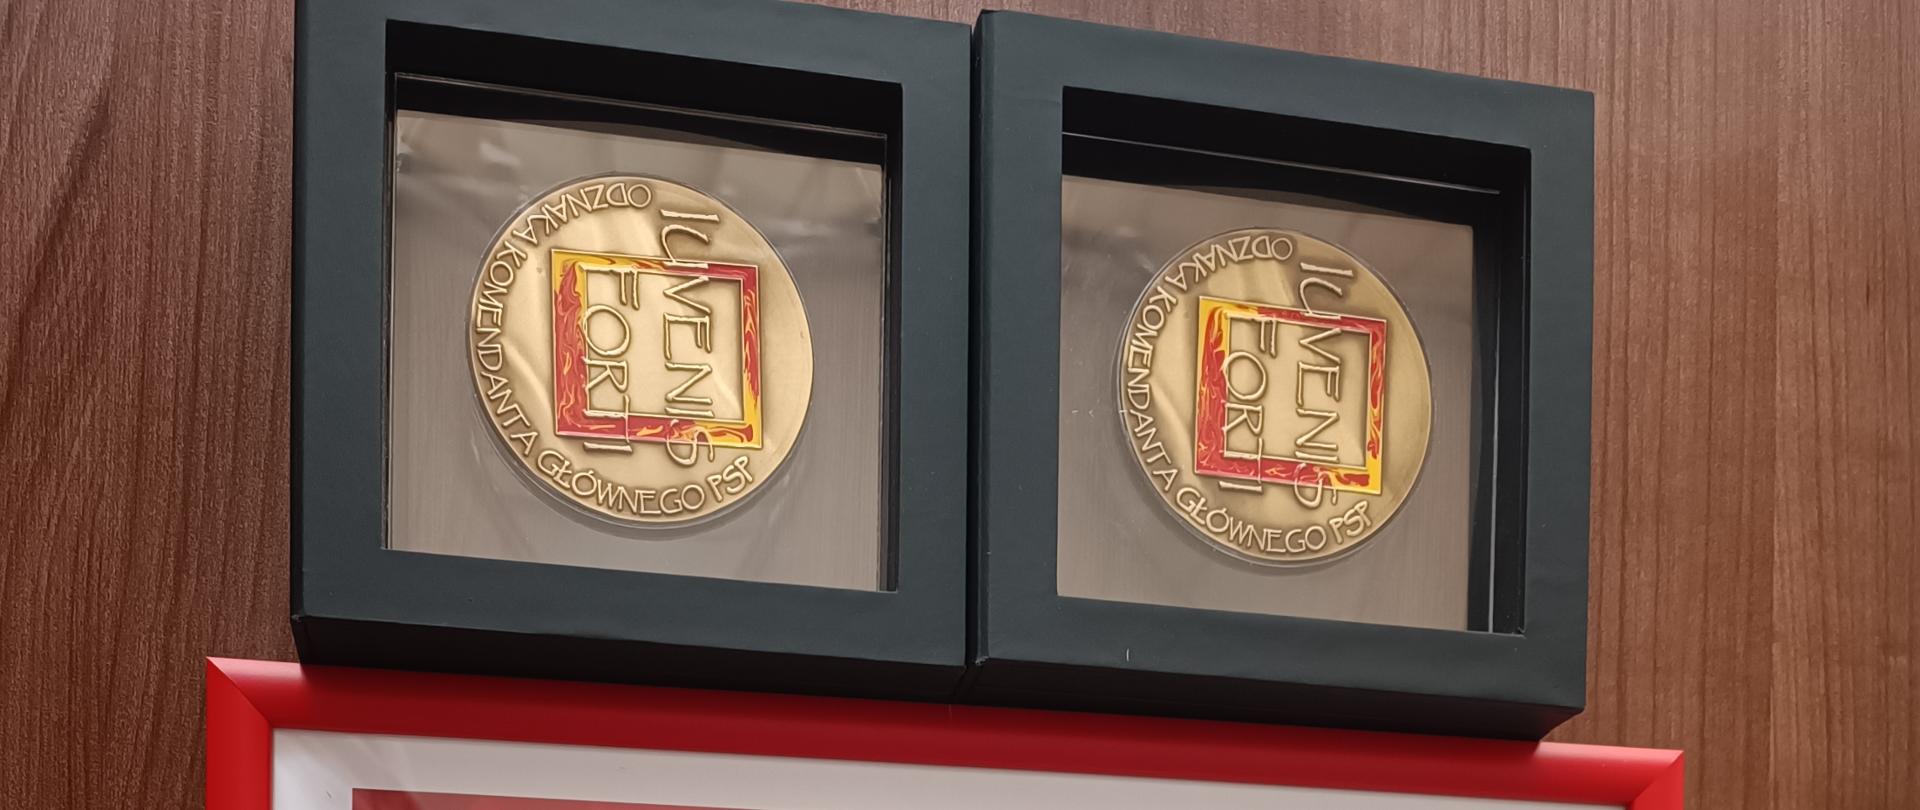 Dyplomy oraz medale Iuvenis Forti